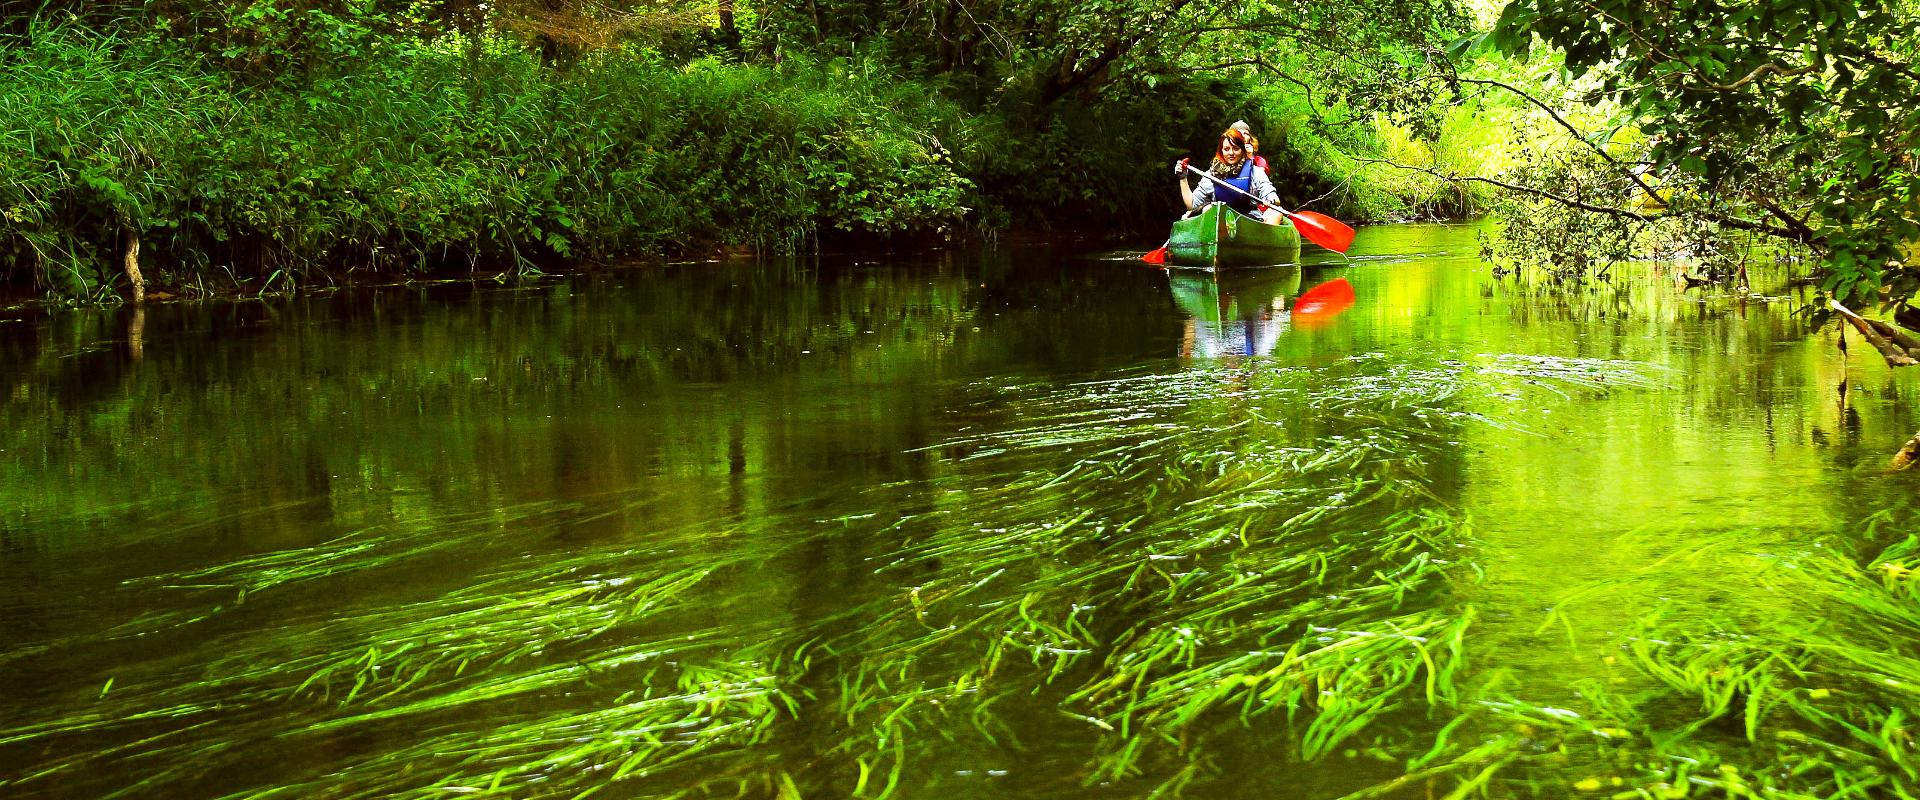 Canoe trips on the River Ahja in Taevaskoda